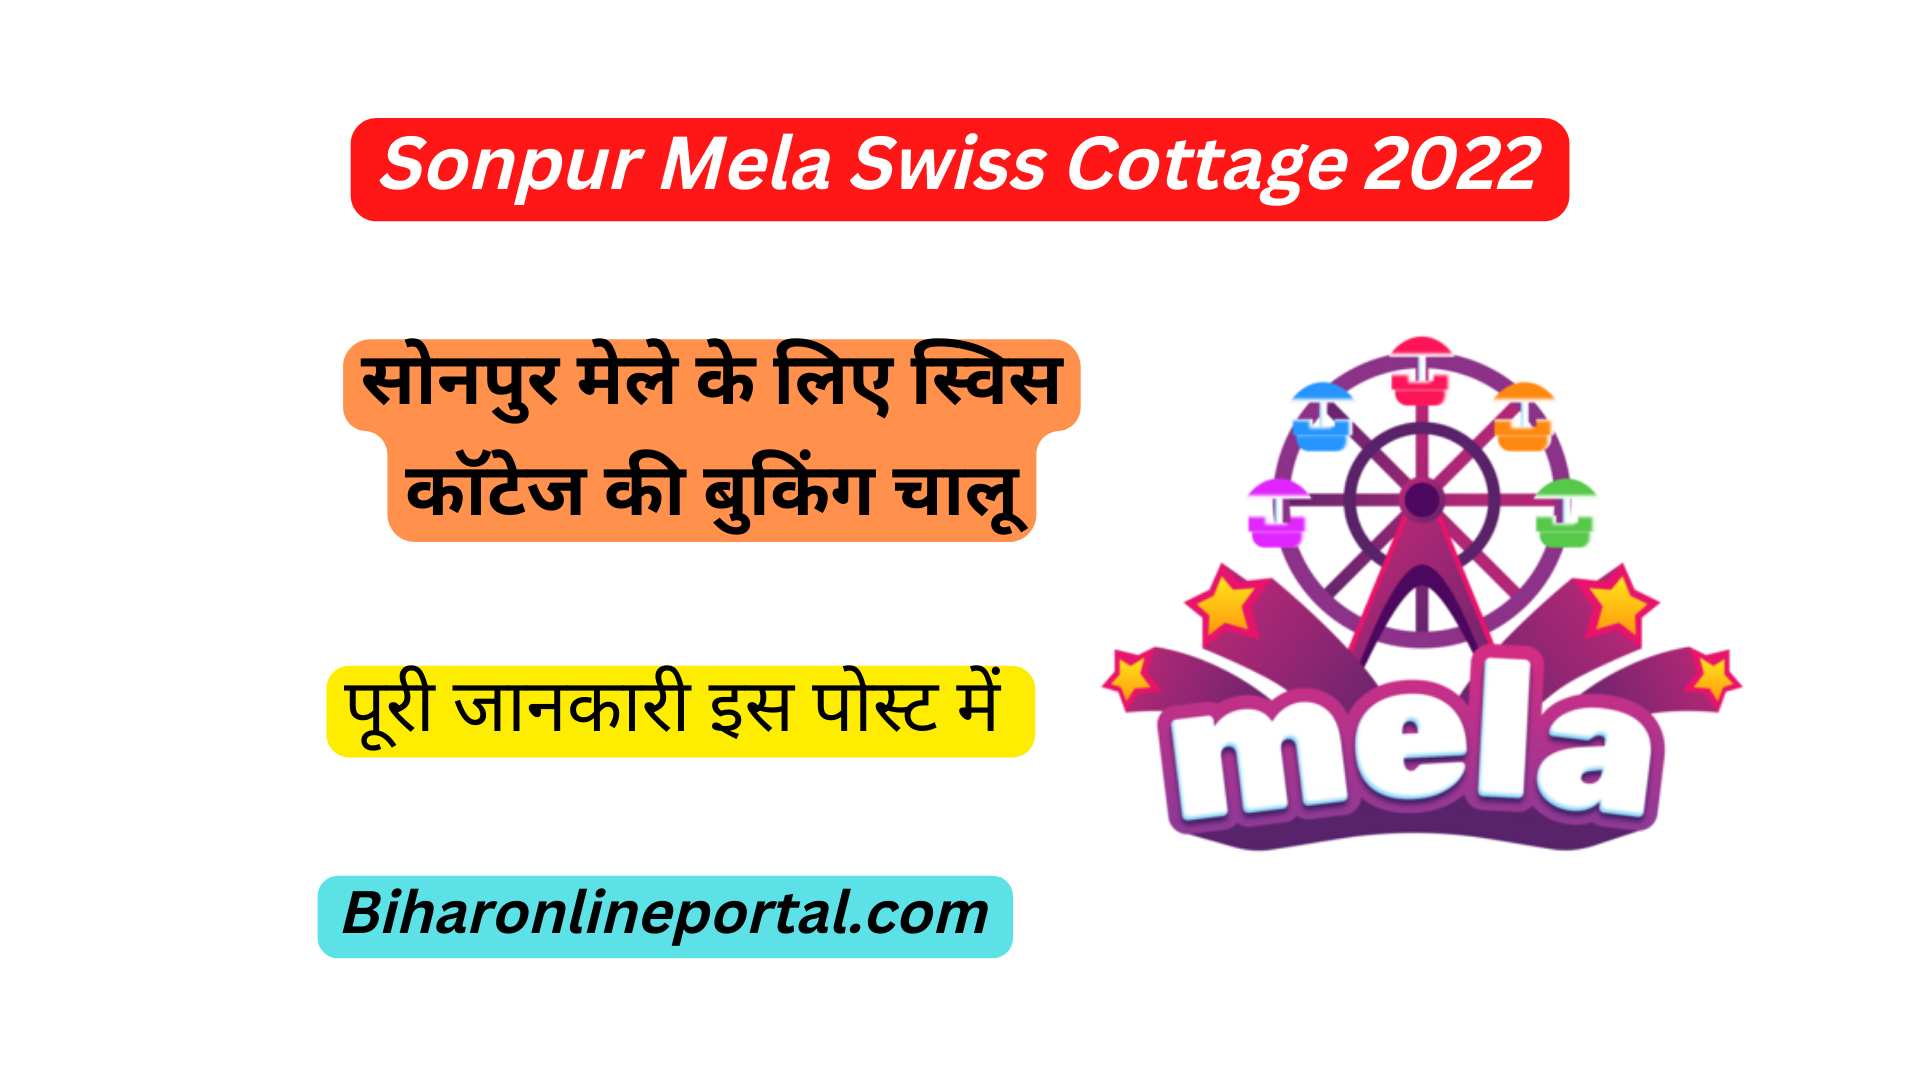 Sonpur Mela Swiss Cottage